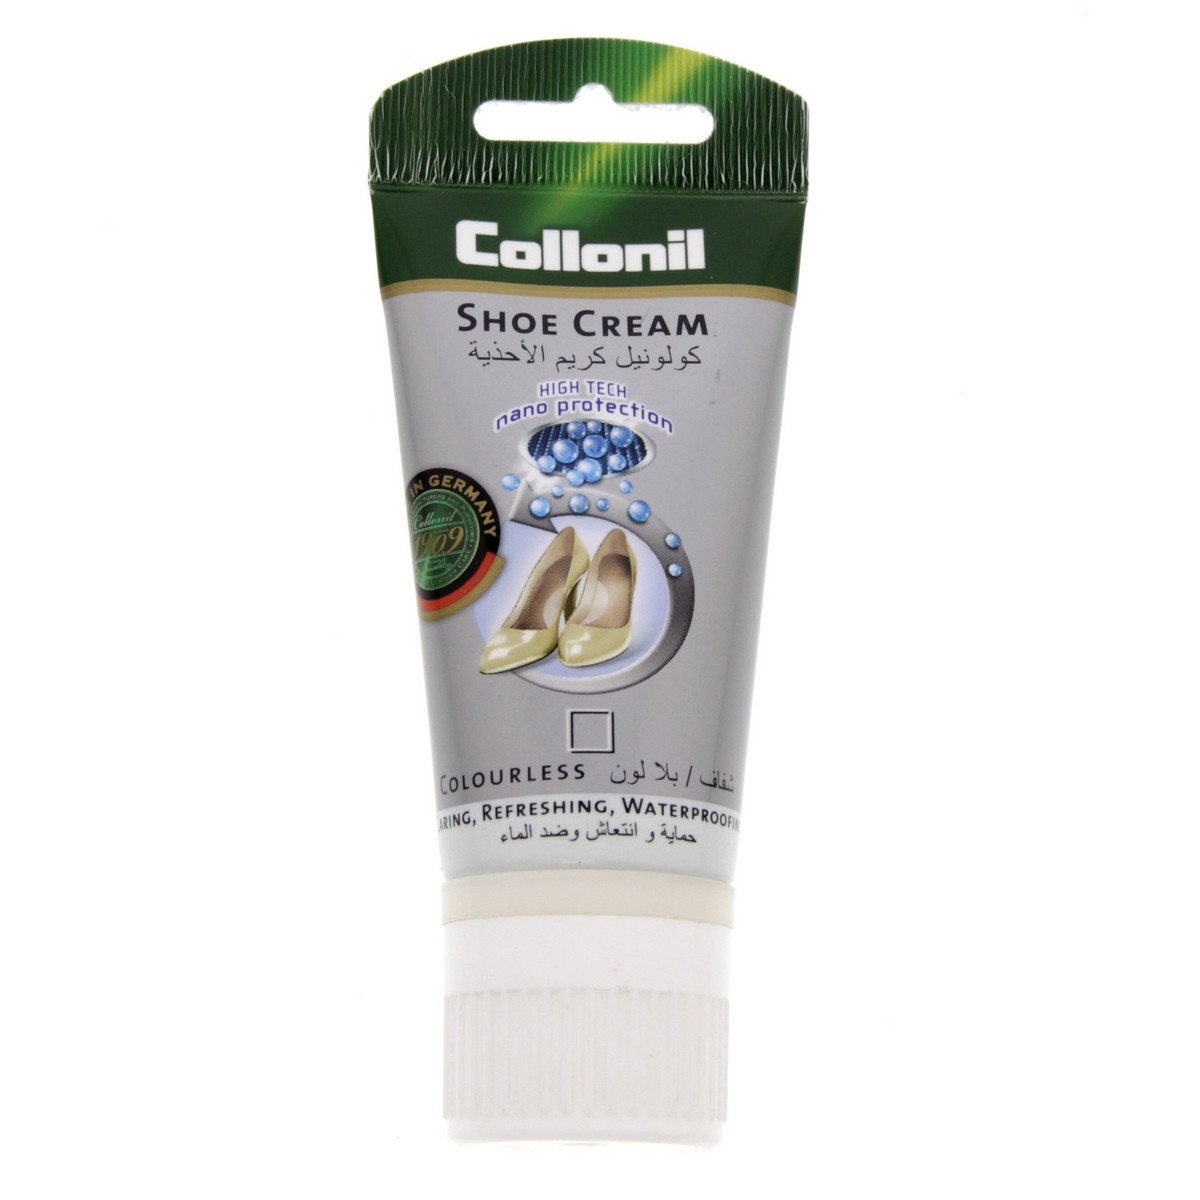 Collonil Shoe Cream Colourless 50 ml